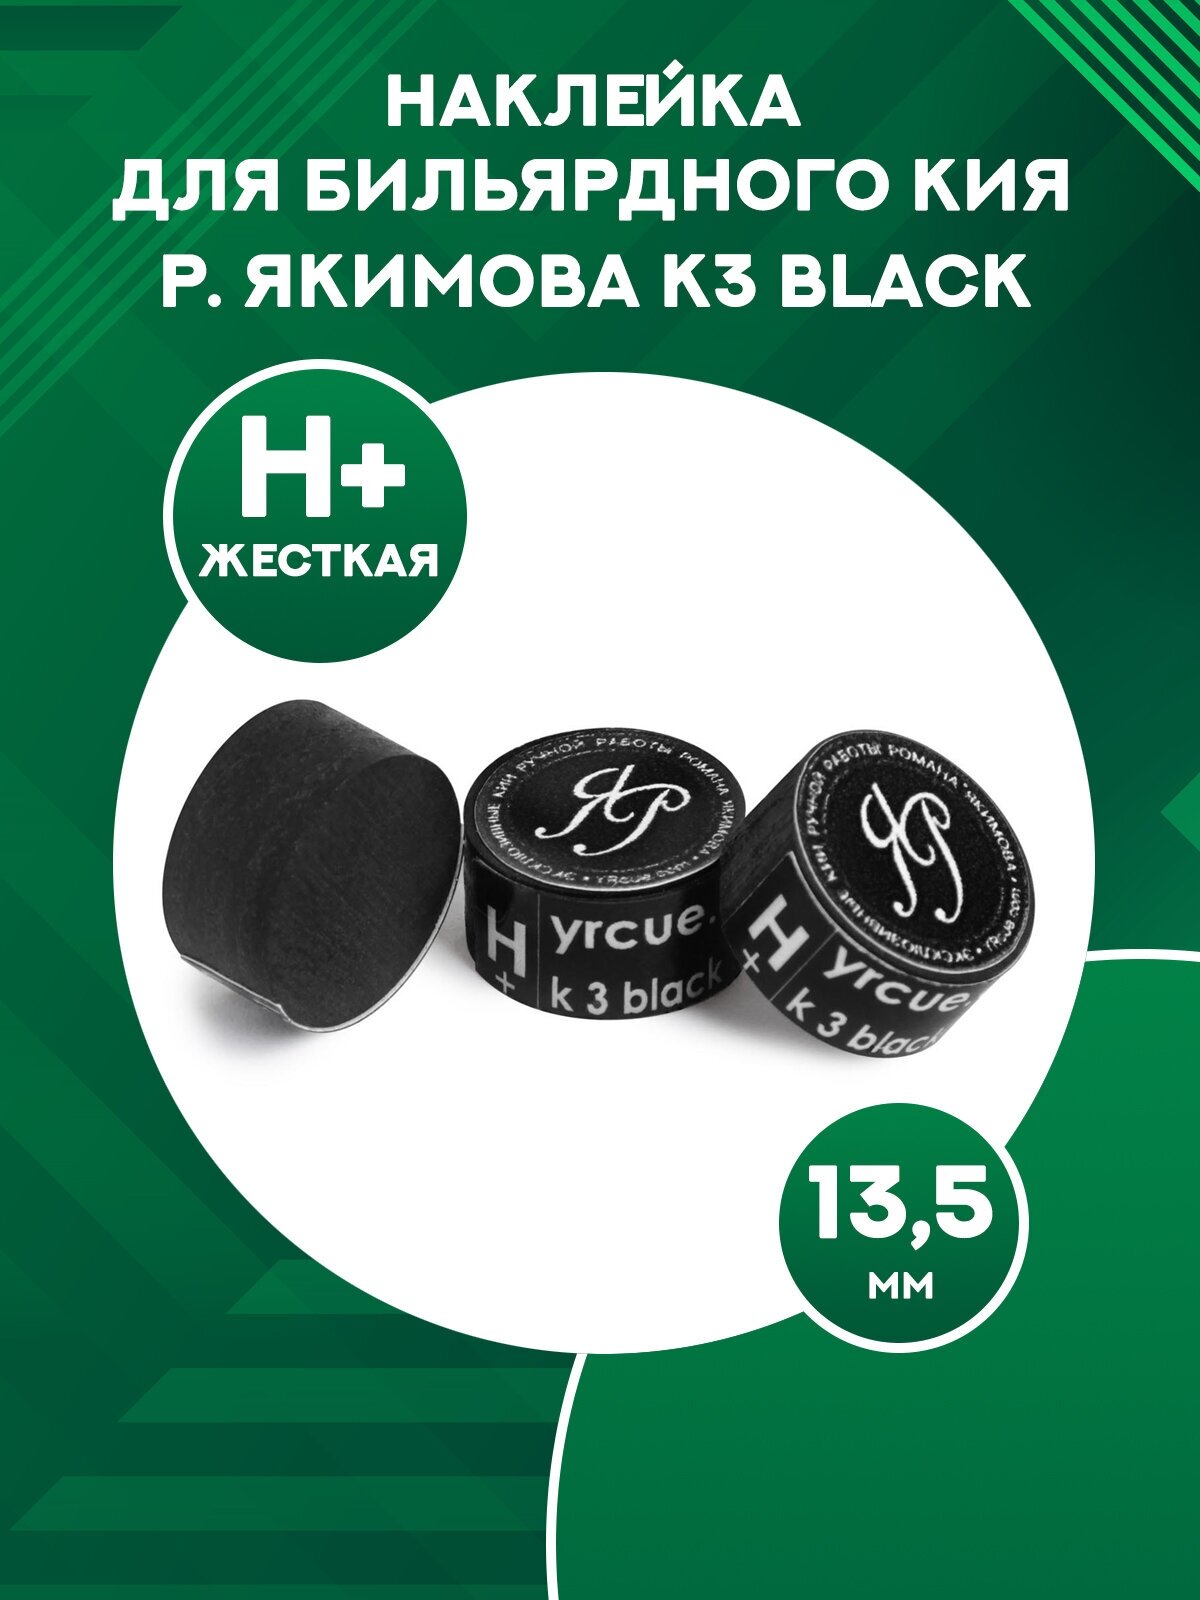 Наклейка для бильярдного кия многослойная Р. Якимова K3 Black (H+, 13,5 мм), 1 шт